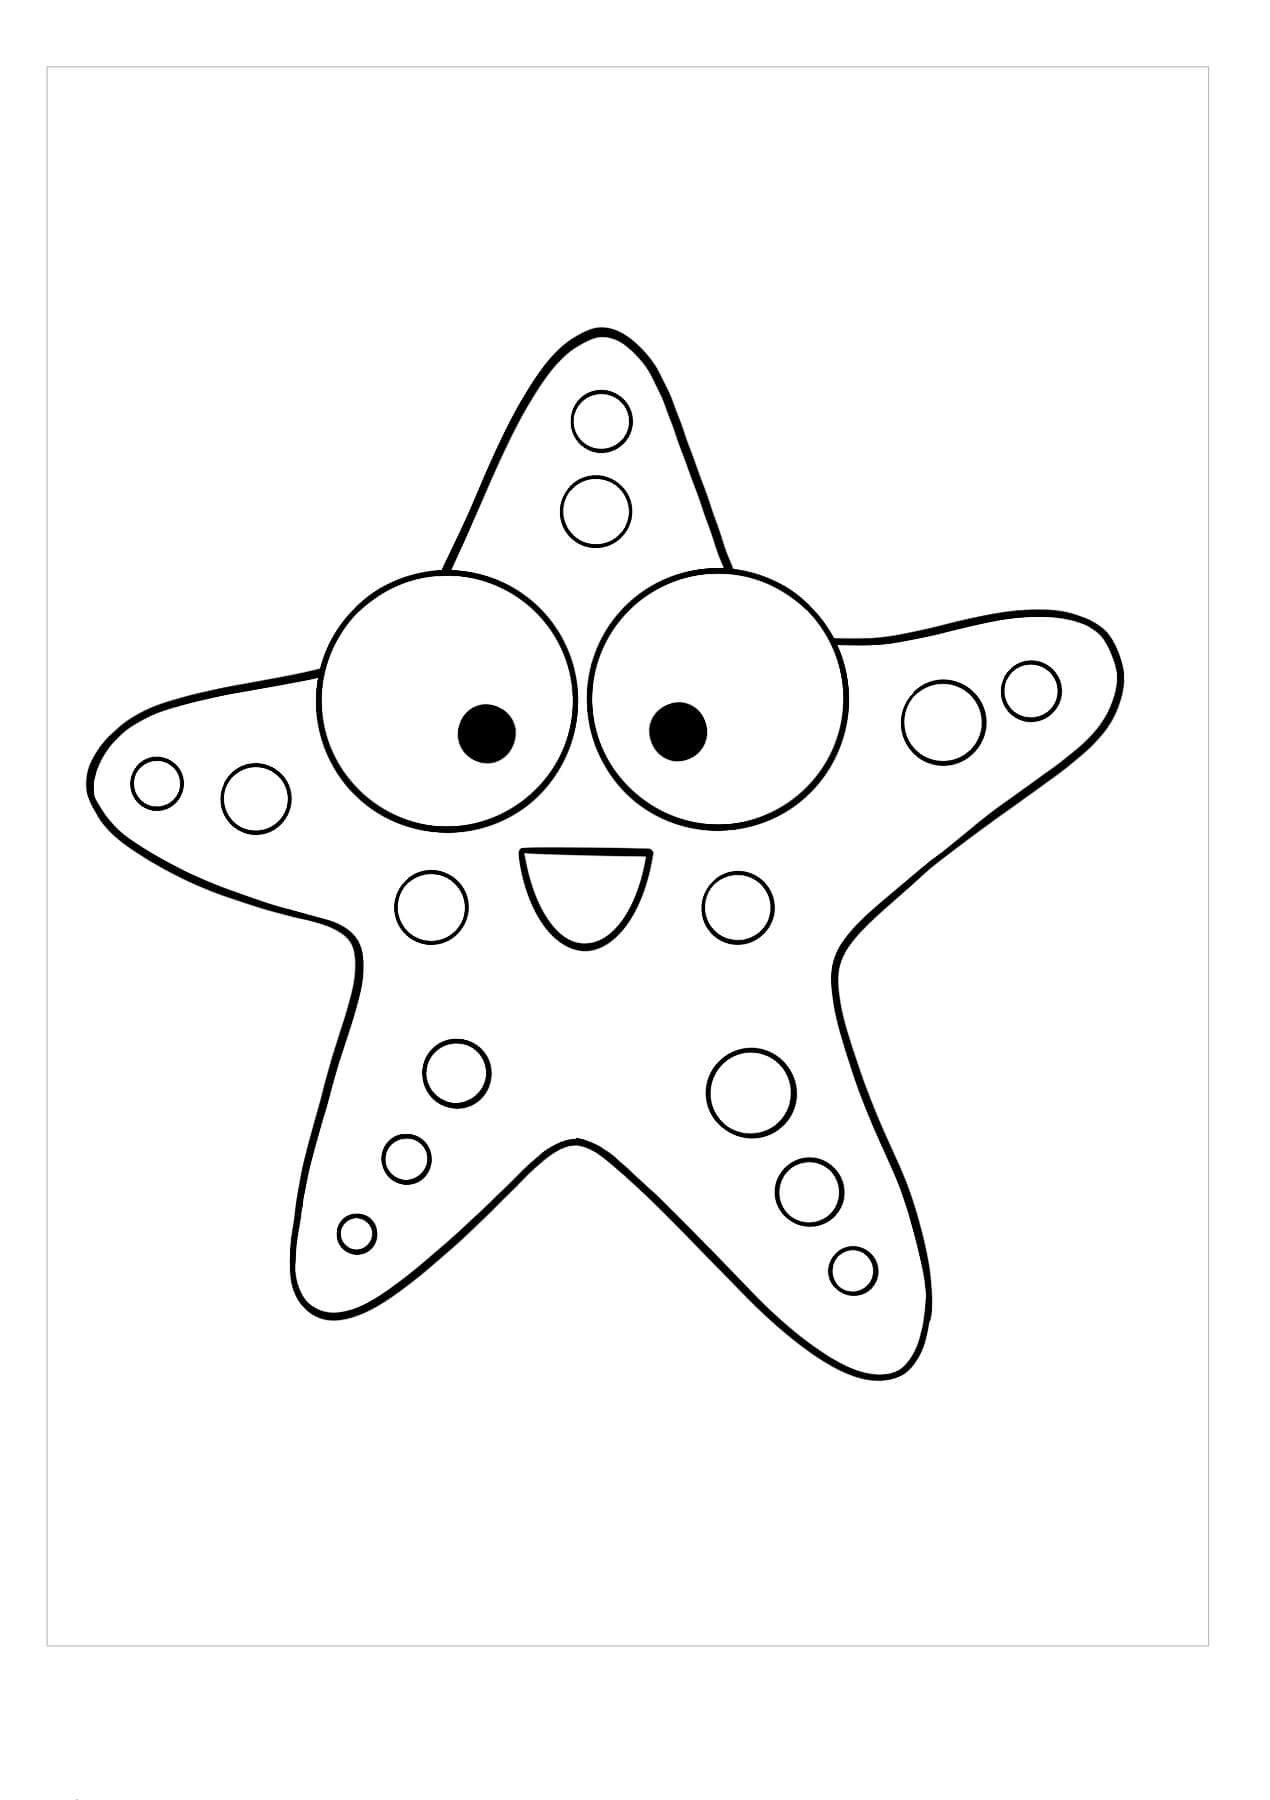 Estrella De Mar Divertido Para Colorear Imprimir E Dibujar Coloringonly Com